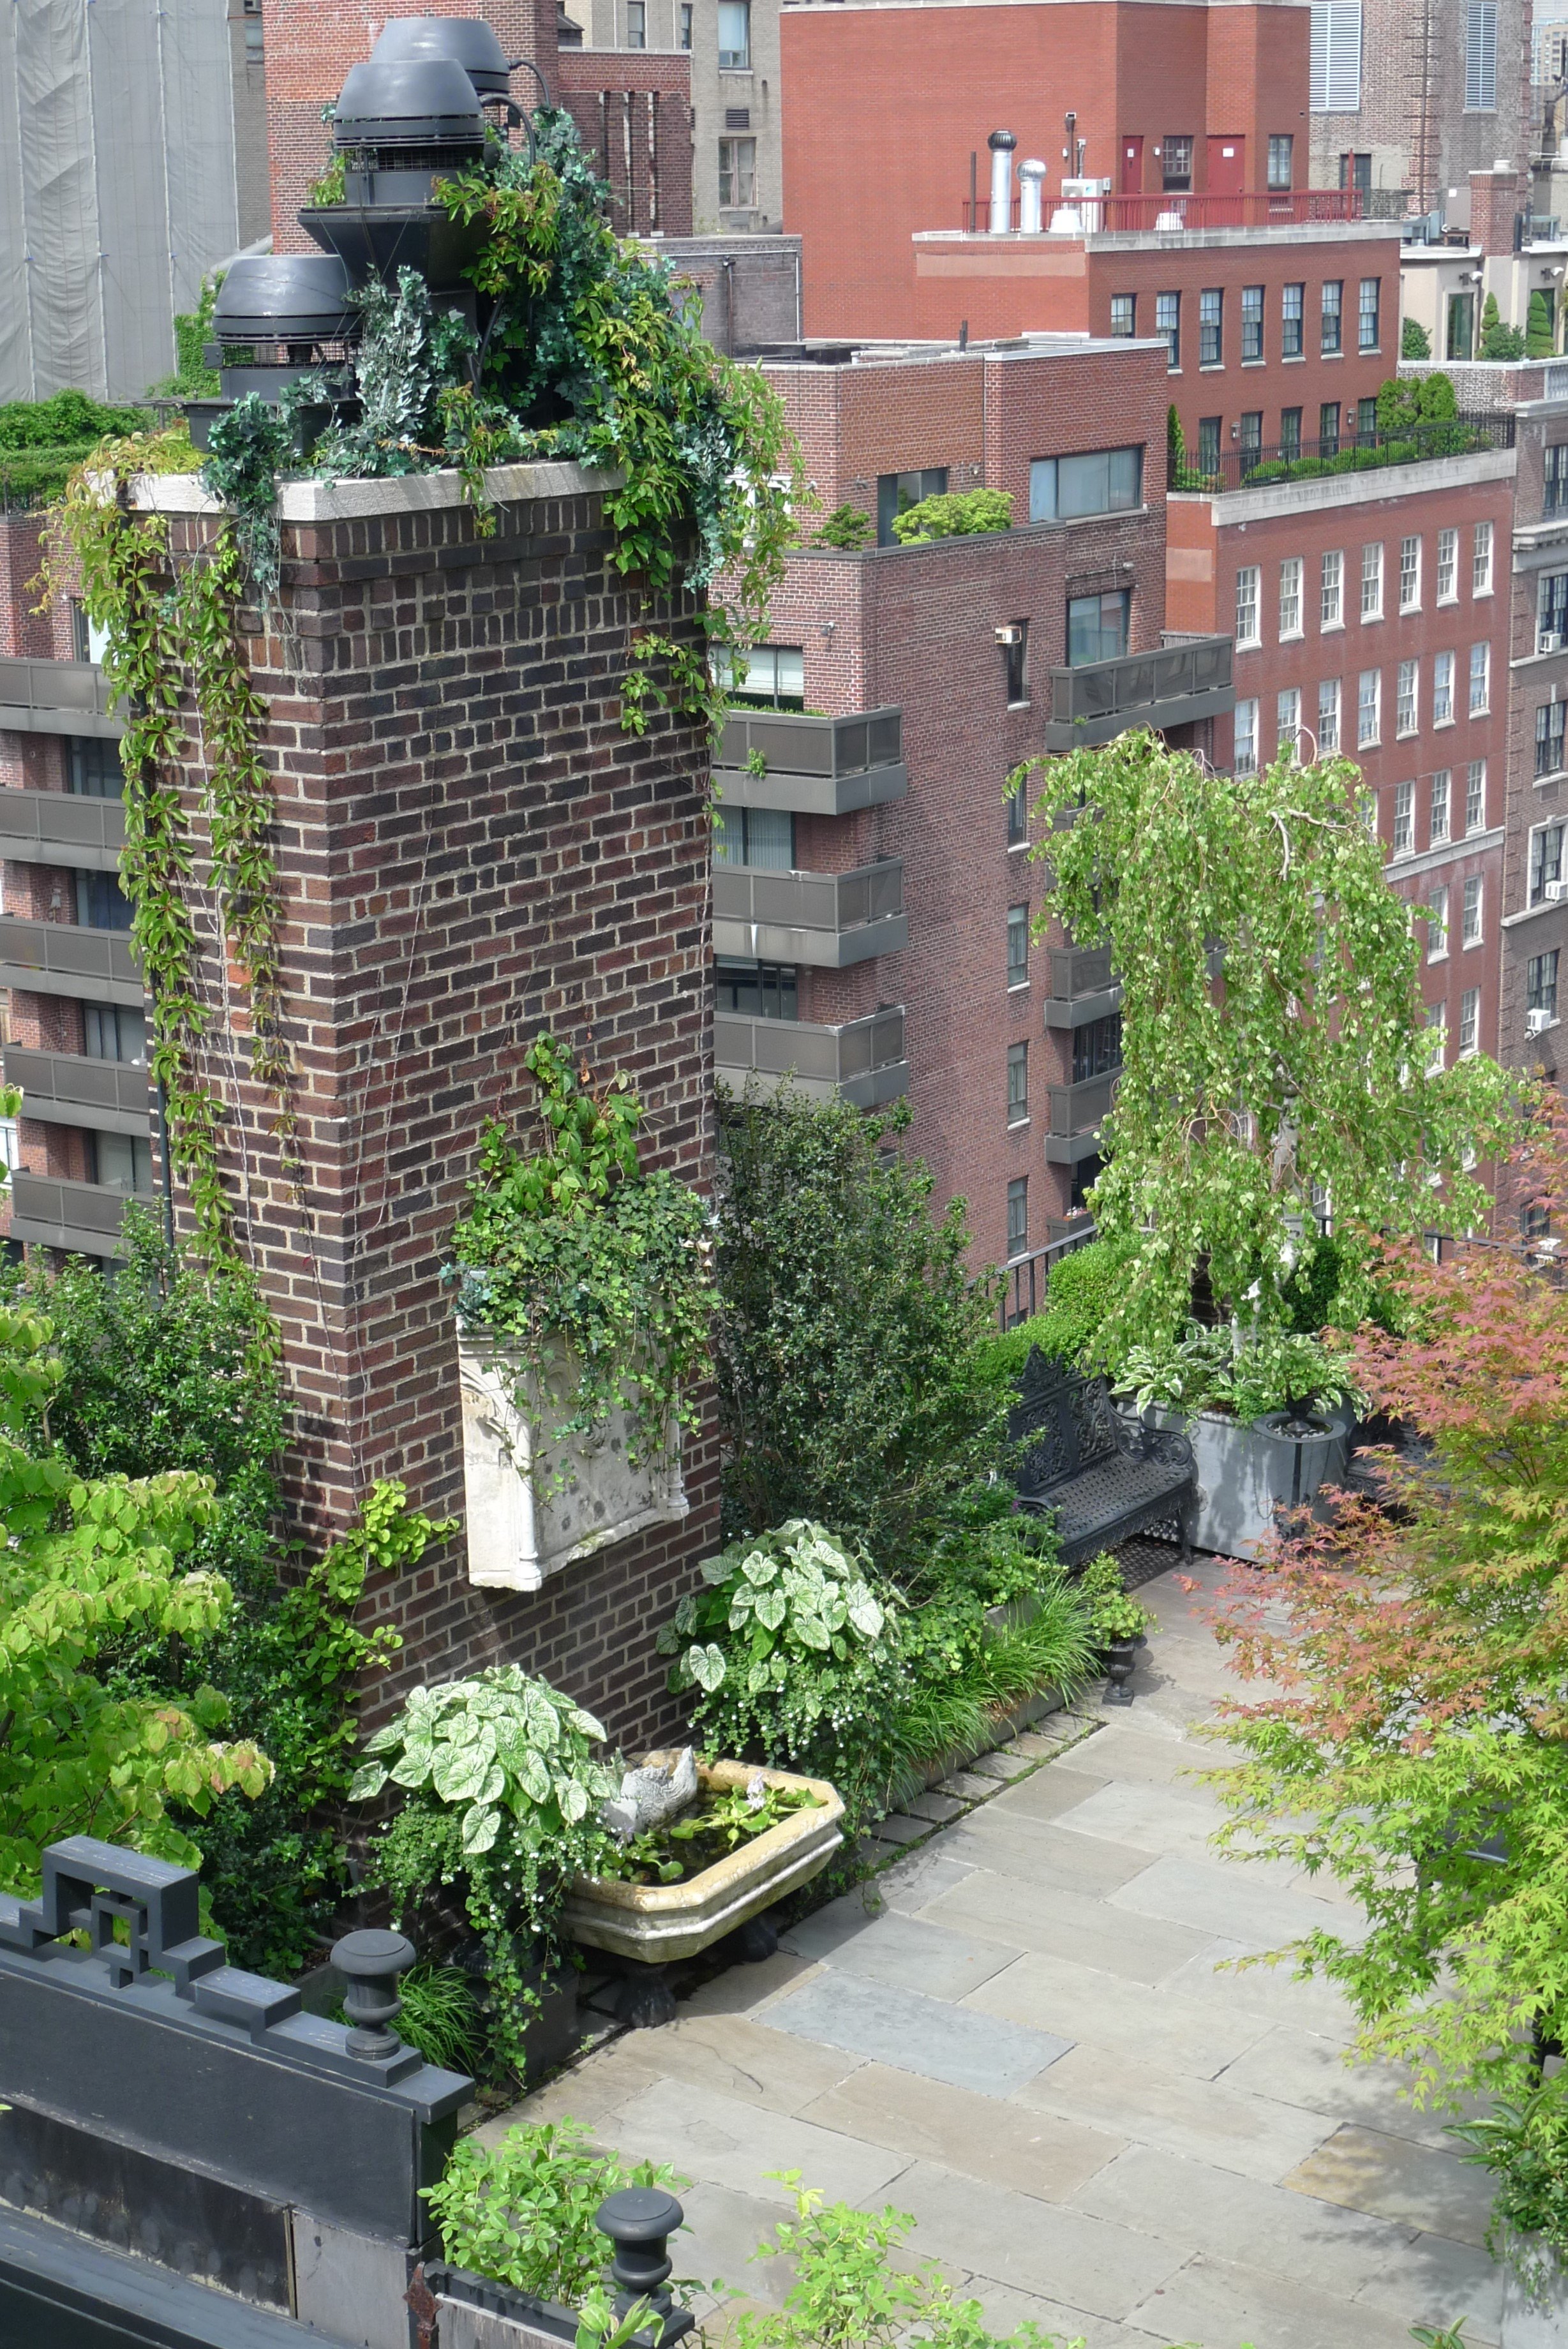 BI, nyc landscape garden design build install maintenance high end outdoor space water feature.JPG